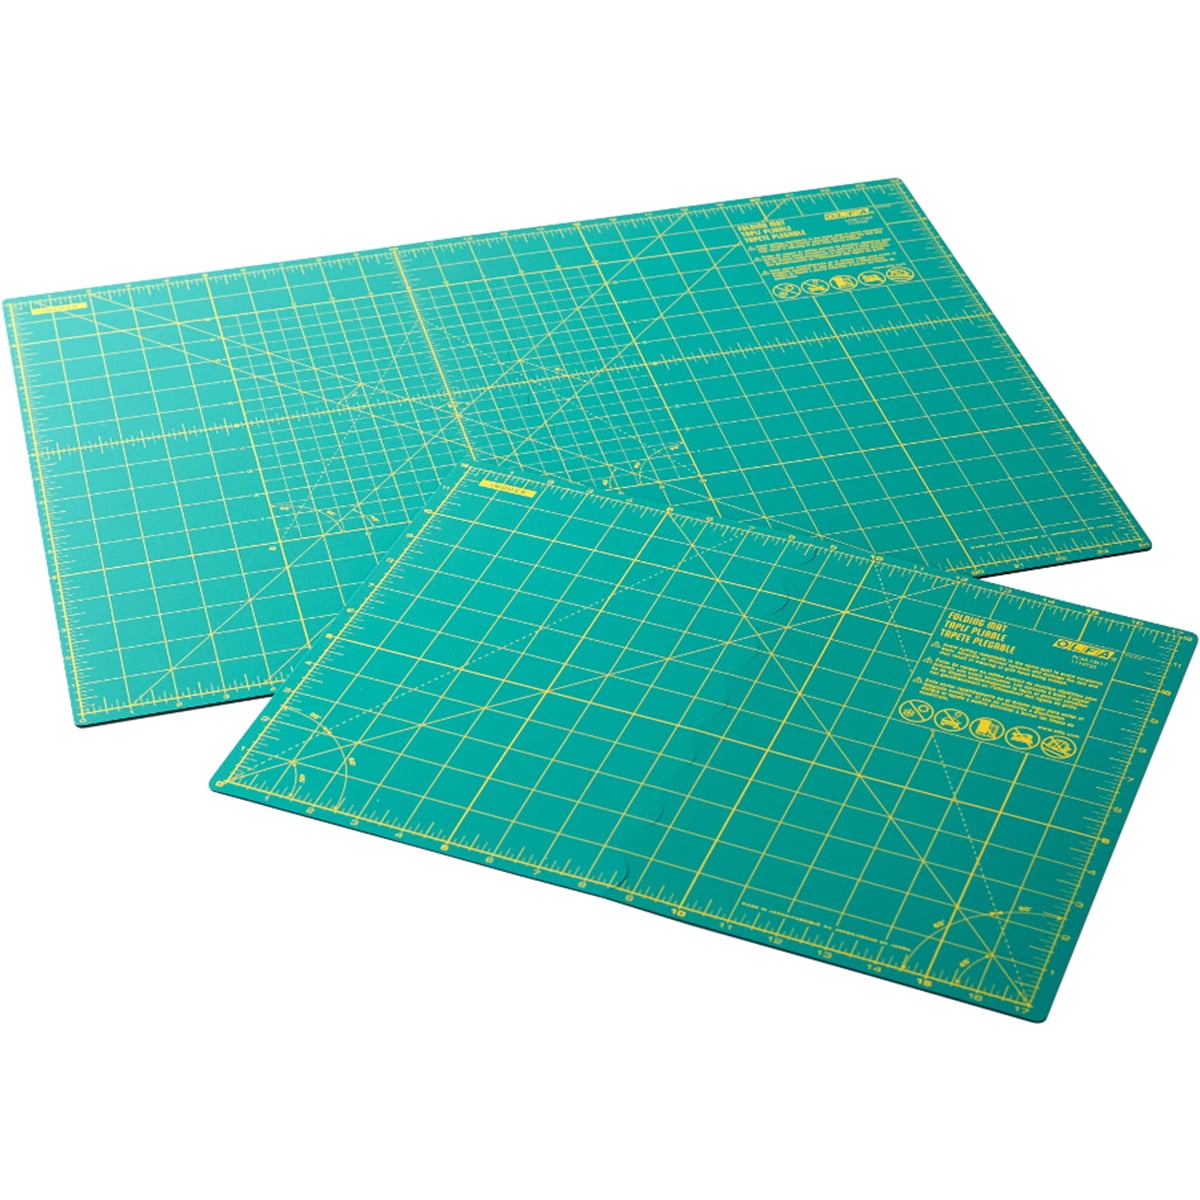 ALTOS EZ MAT Framing Mat Cutting System Board & Cutter, Original Box and  Manual $8.00 - PicClick